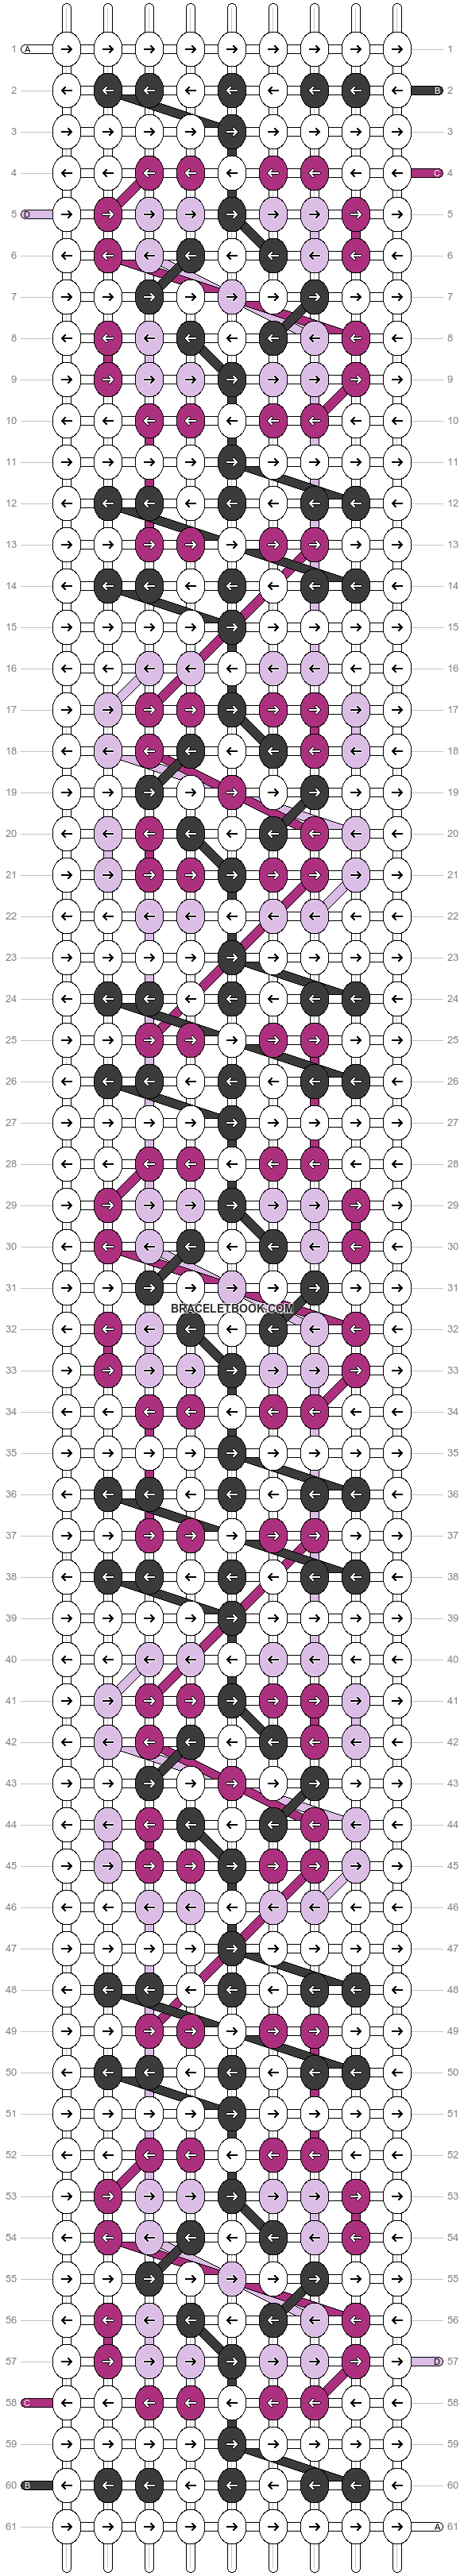 Alpha pattern #23658 variation #8065 pattern